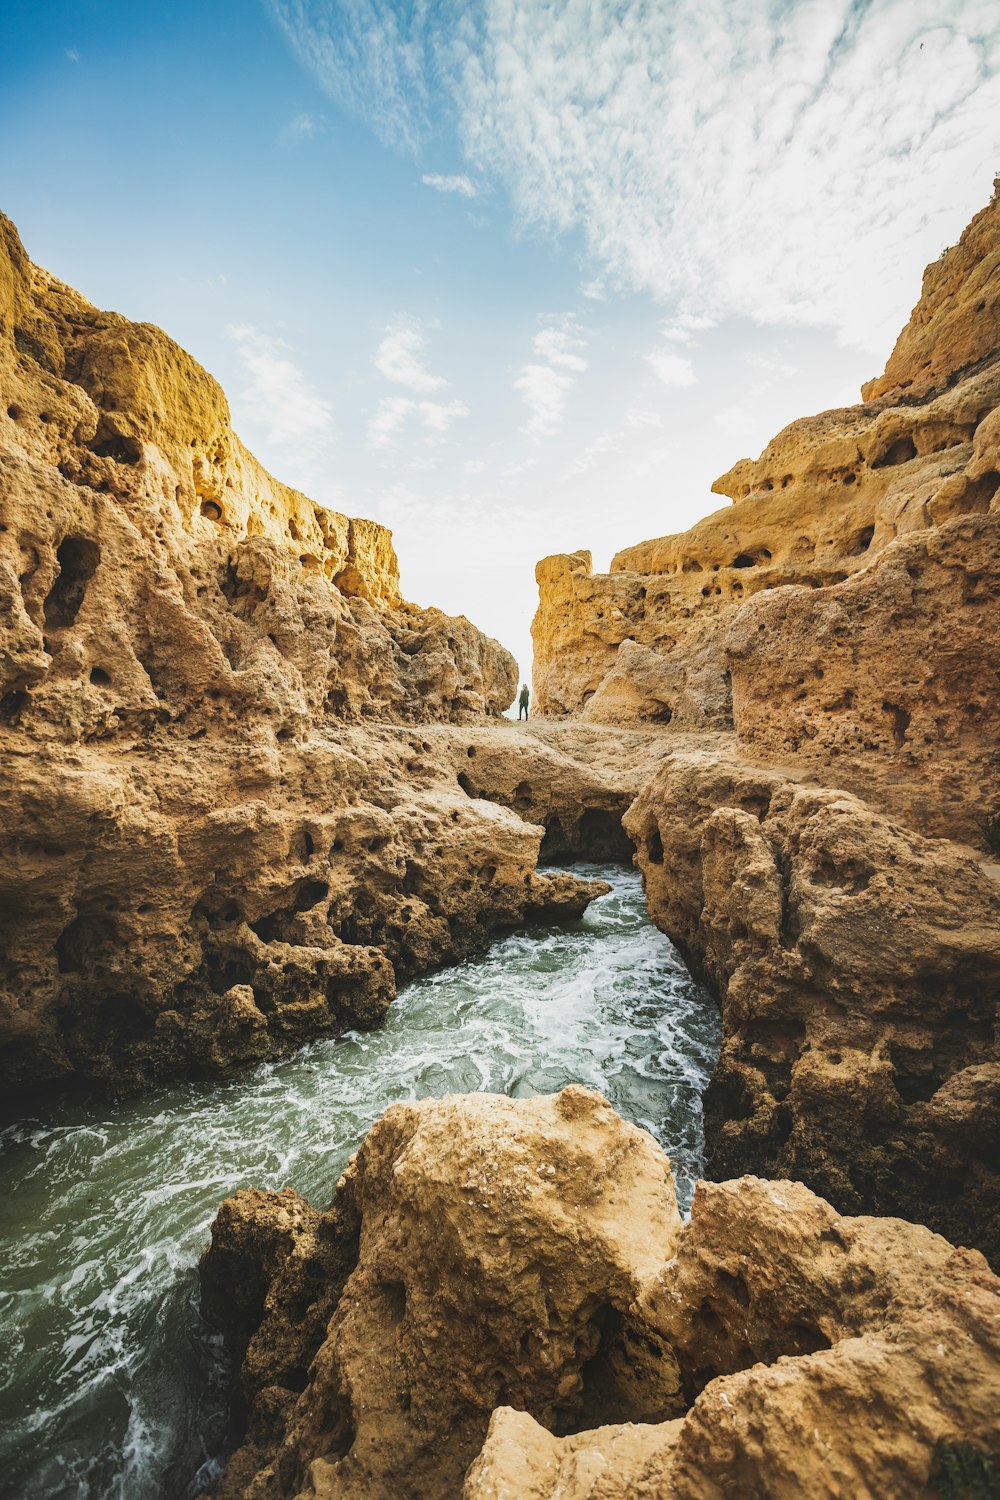 a river flowing through a rocky canyon under a blue sky